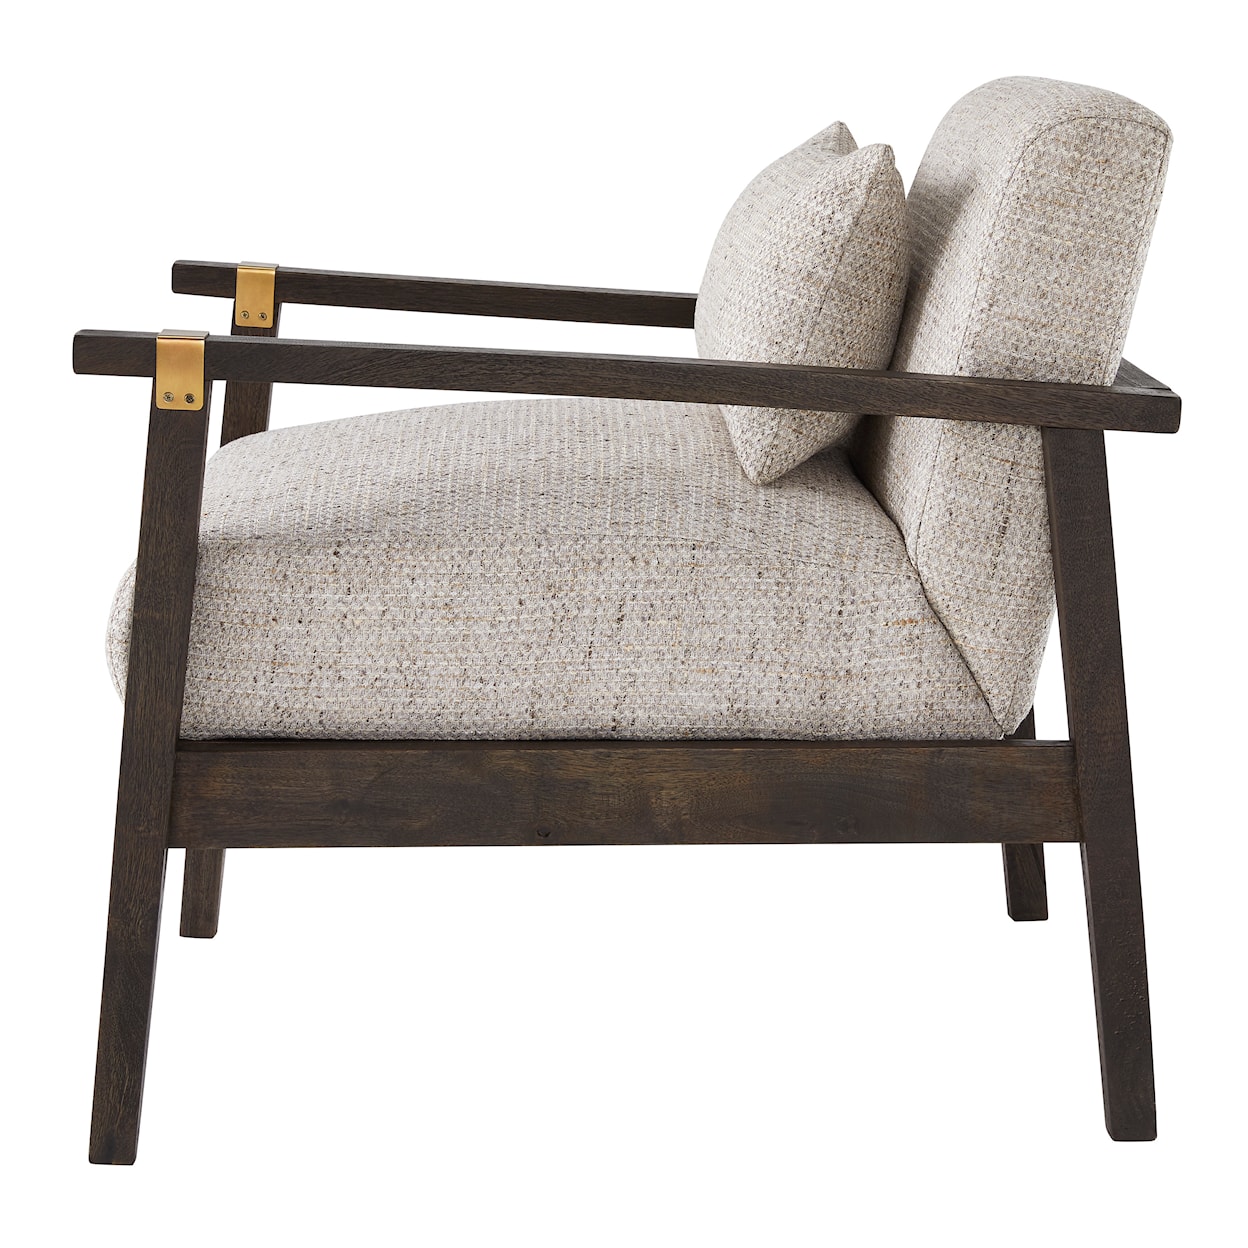 Ashley Furniture Signature Design Balintmore Accent Chair